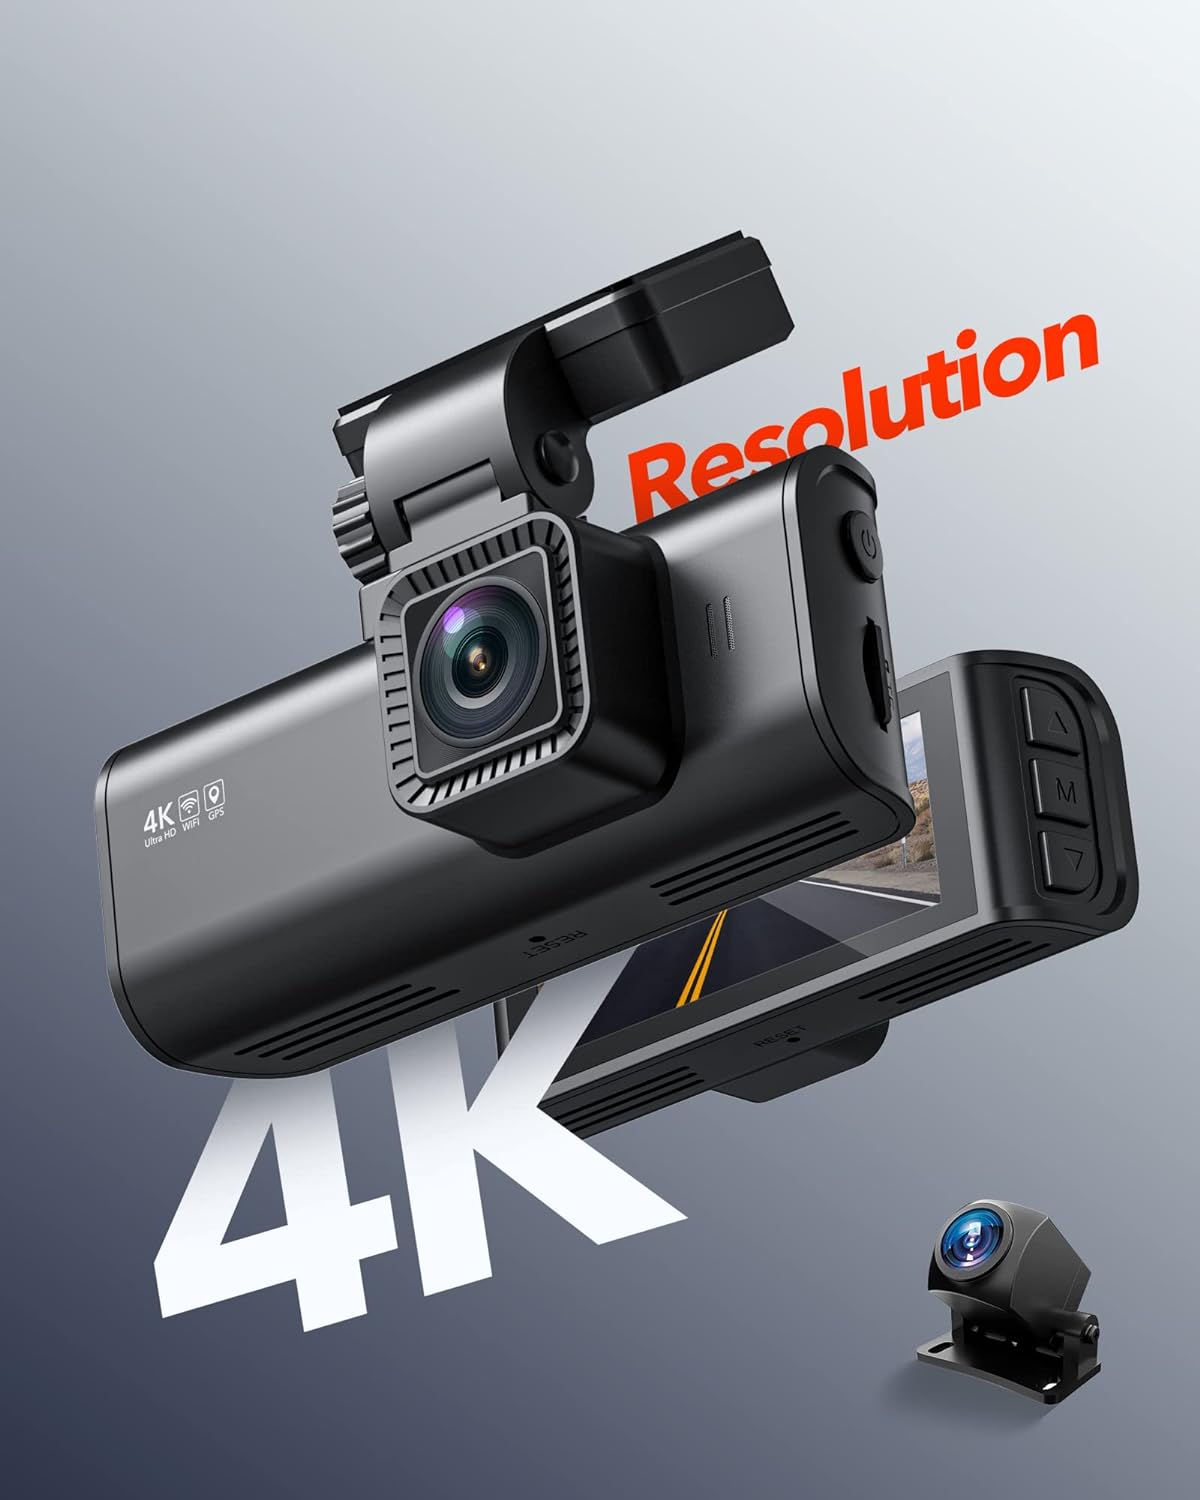 Redtiger 4k Dash cam using the app 